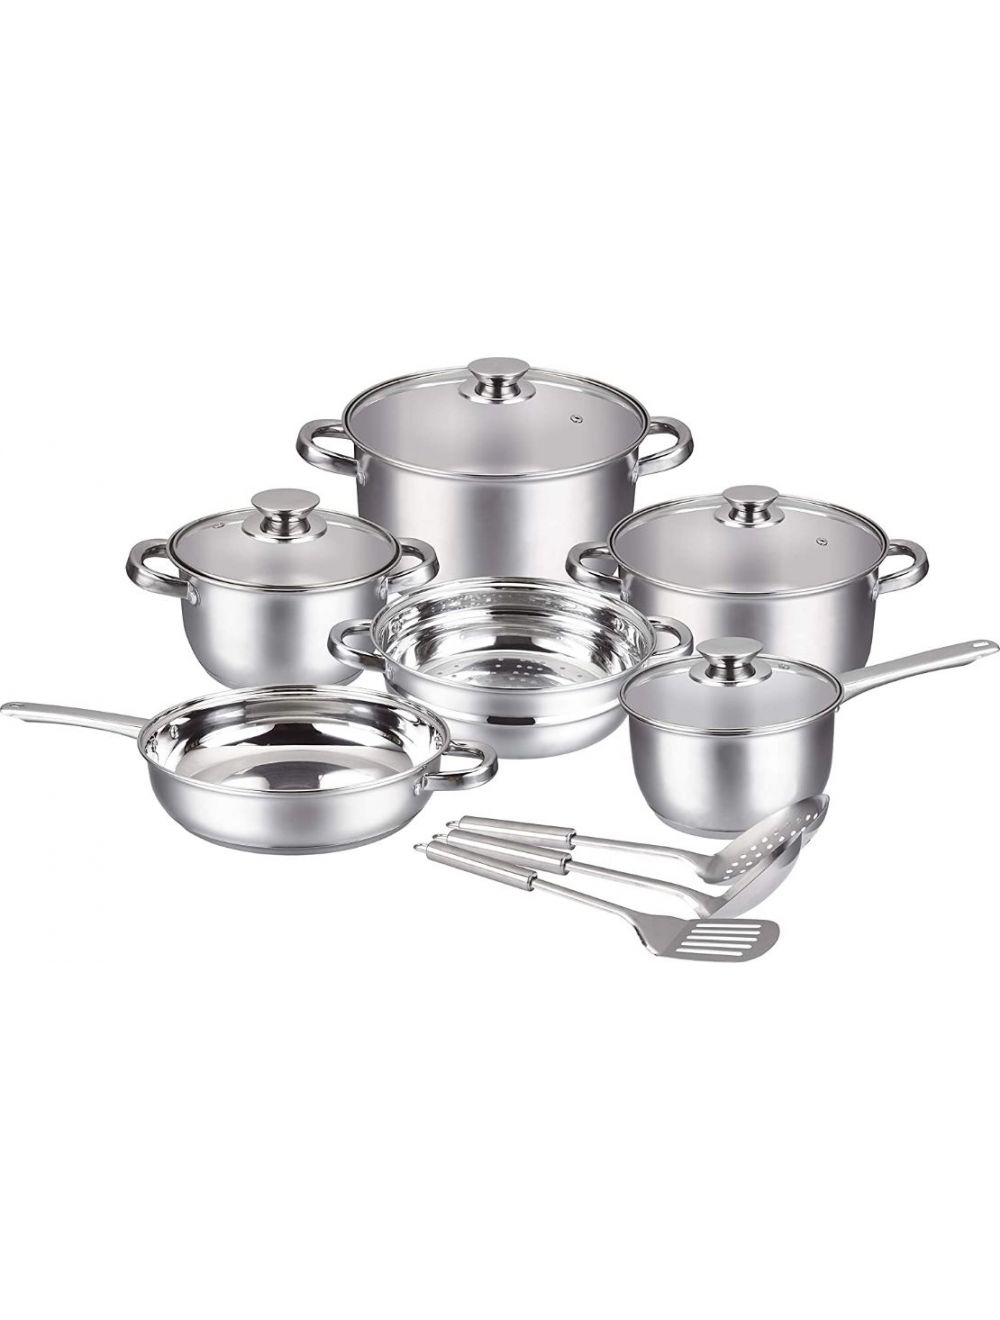 Insiya Stainless Steel Set Silver 13 Pcs Premium Cookware Set Silver